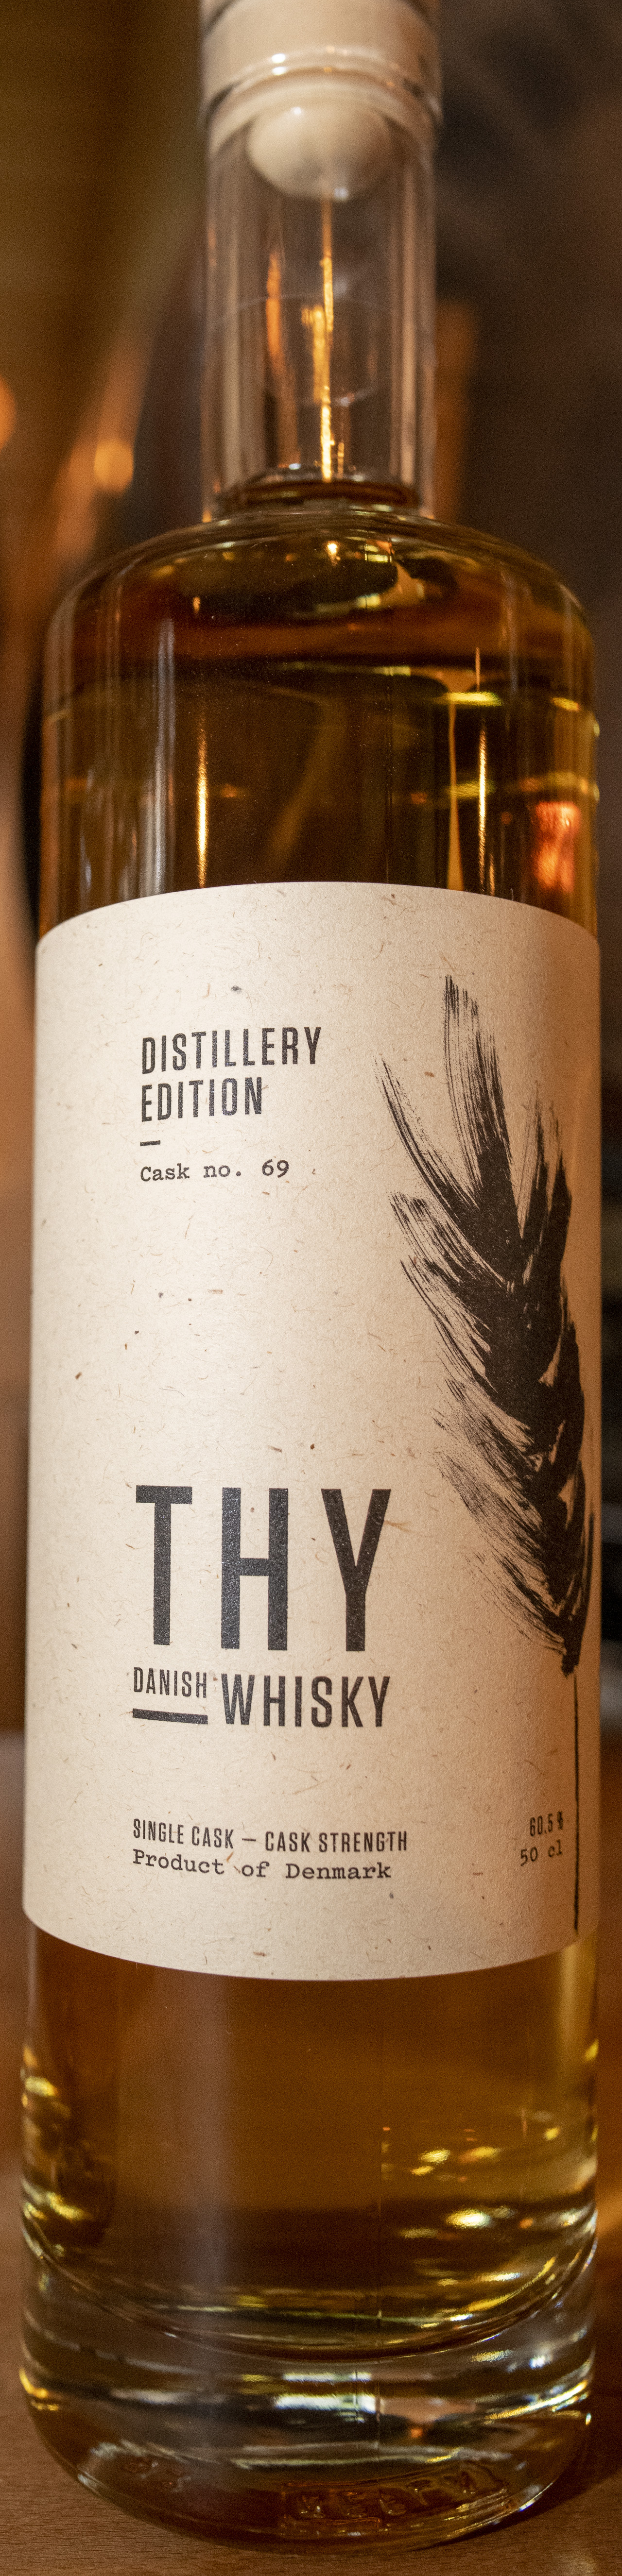 Billede: PHC_5914 - Thy Whisky Distillery Edition cask no 69.jpg